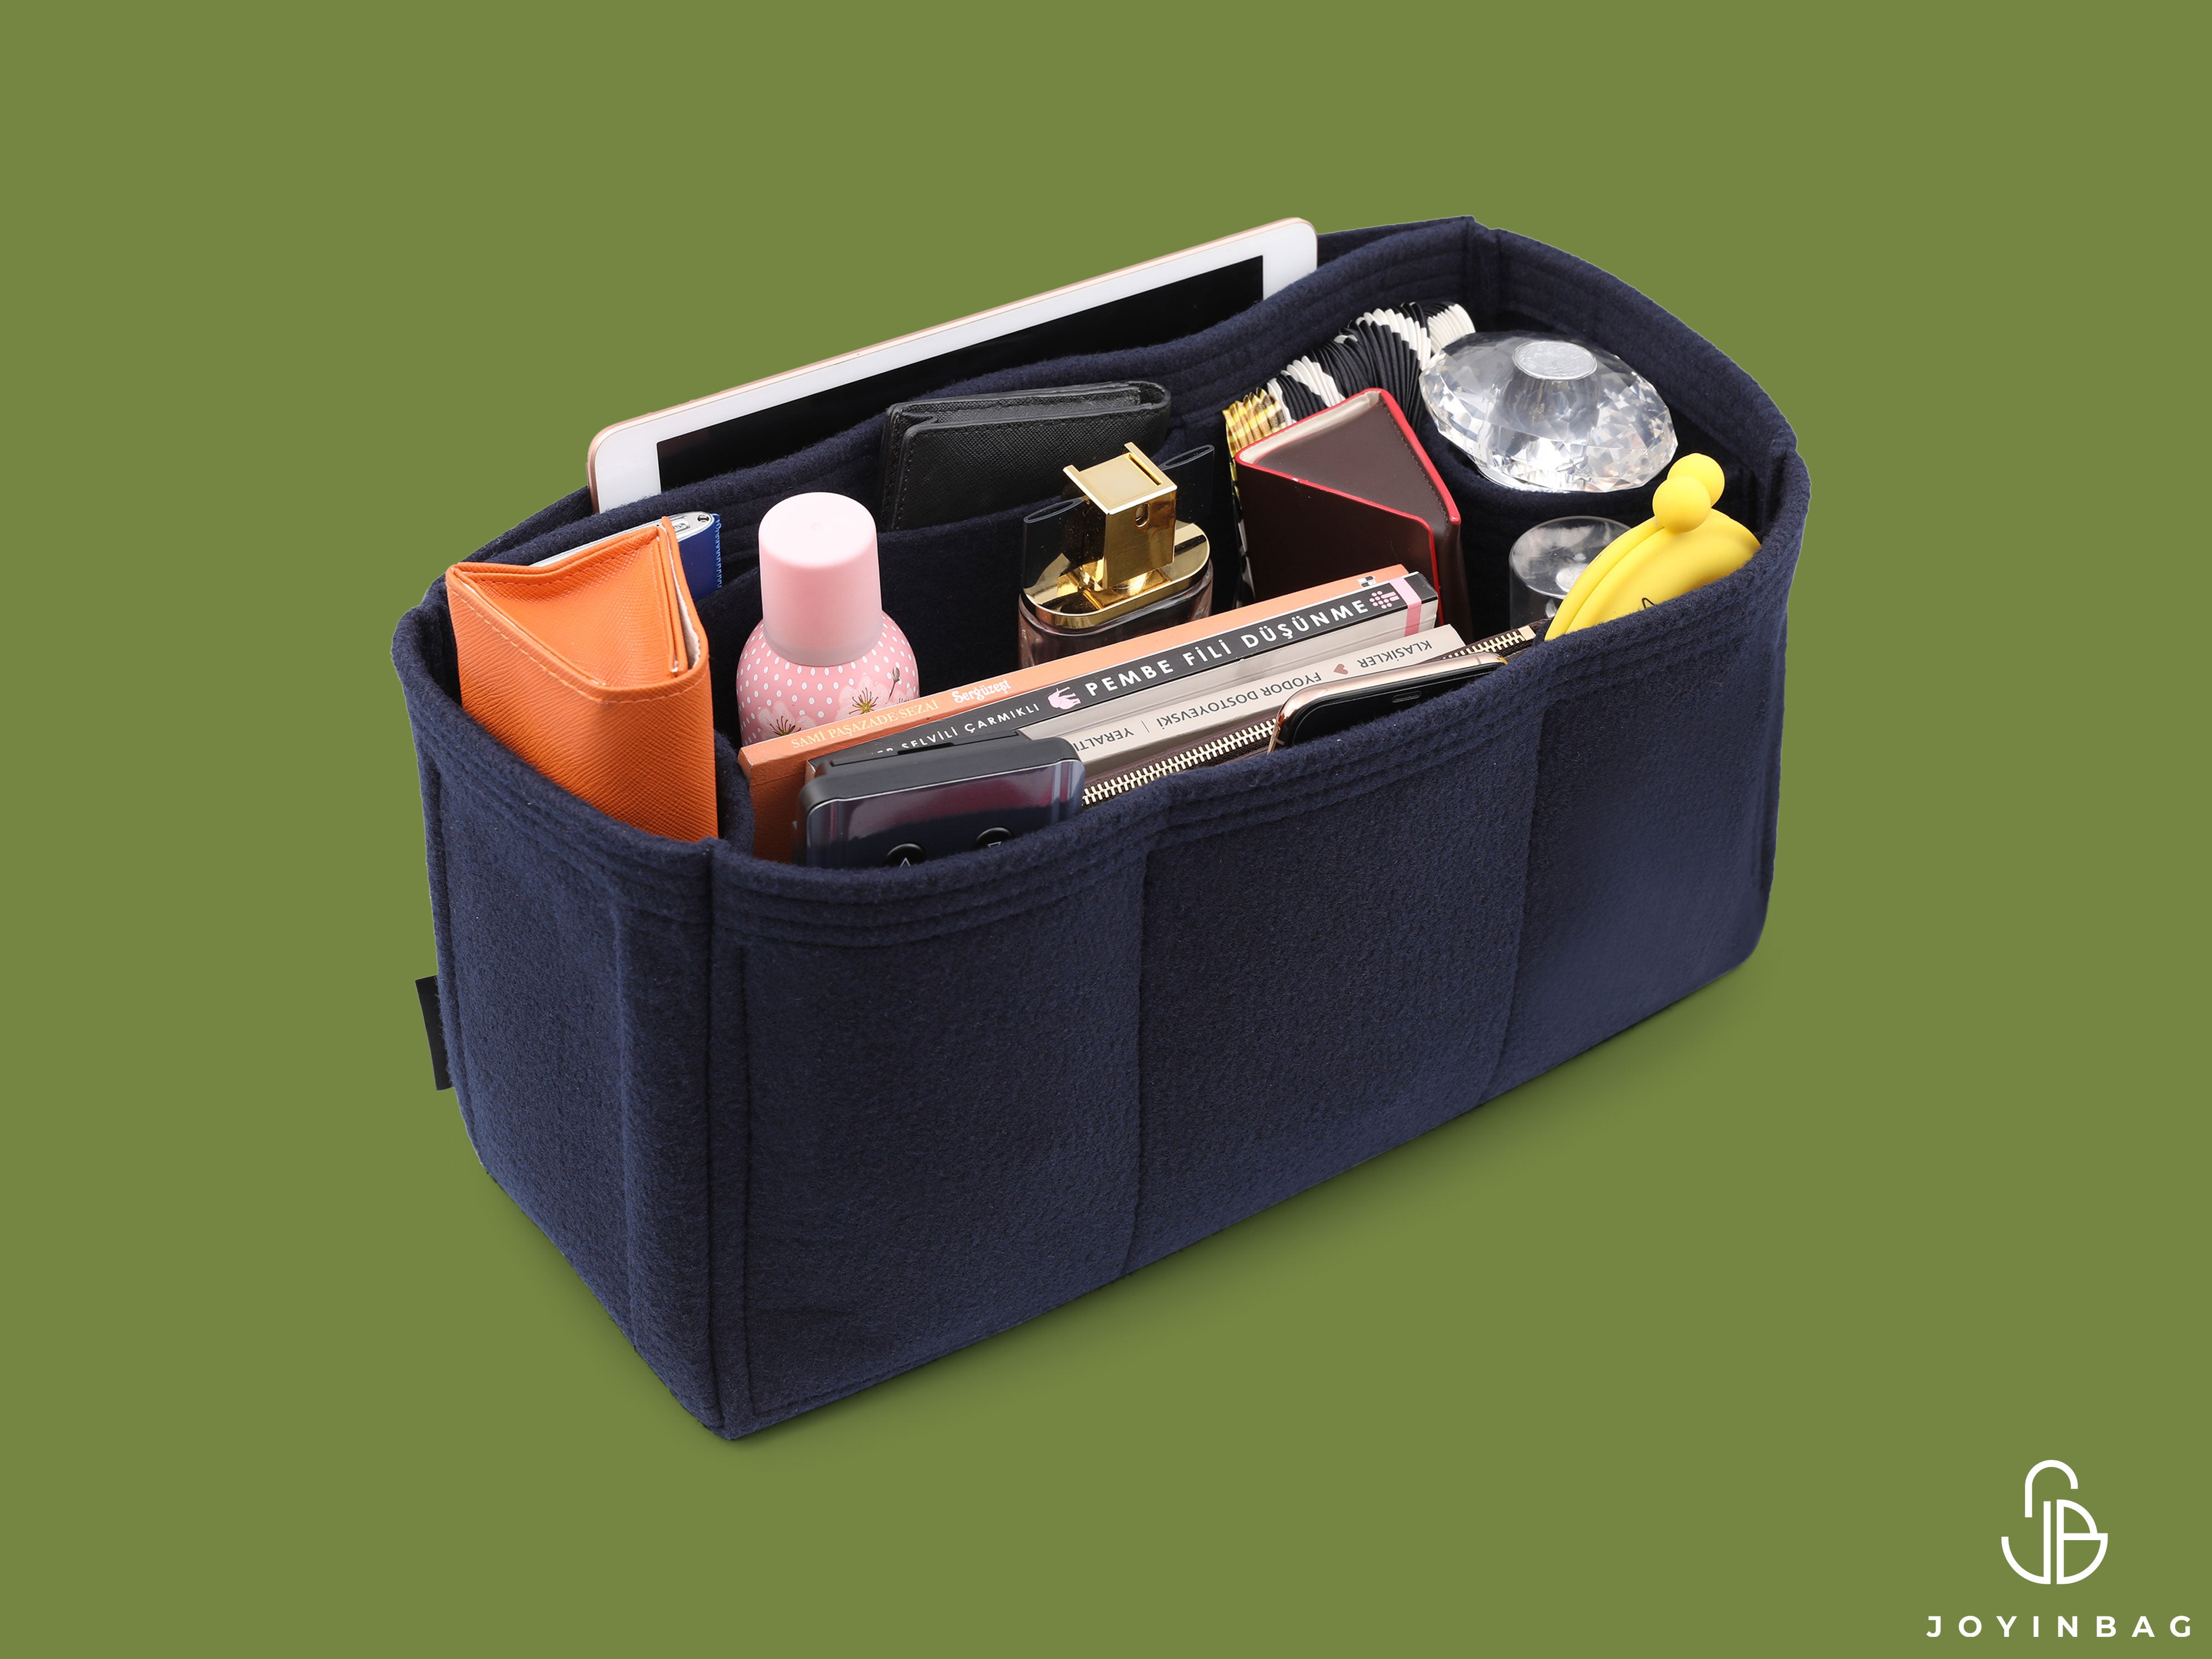 Bag and Purse Organizer with Regular Style for Longchamp Le pliage Cuir Small  Handbag